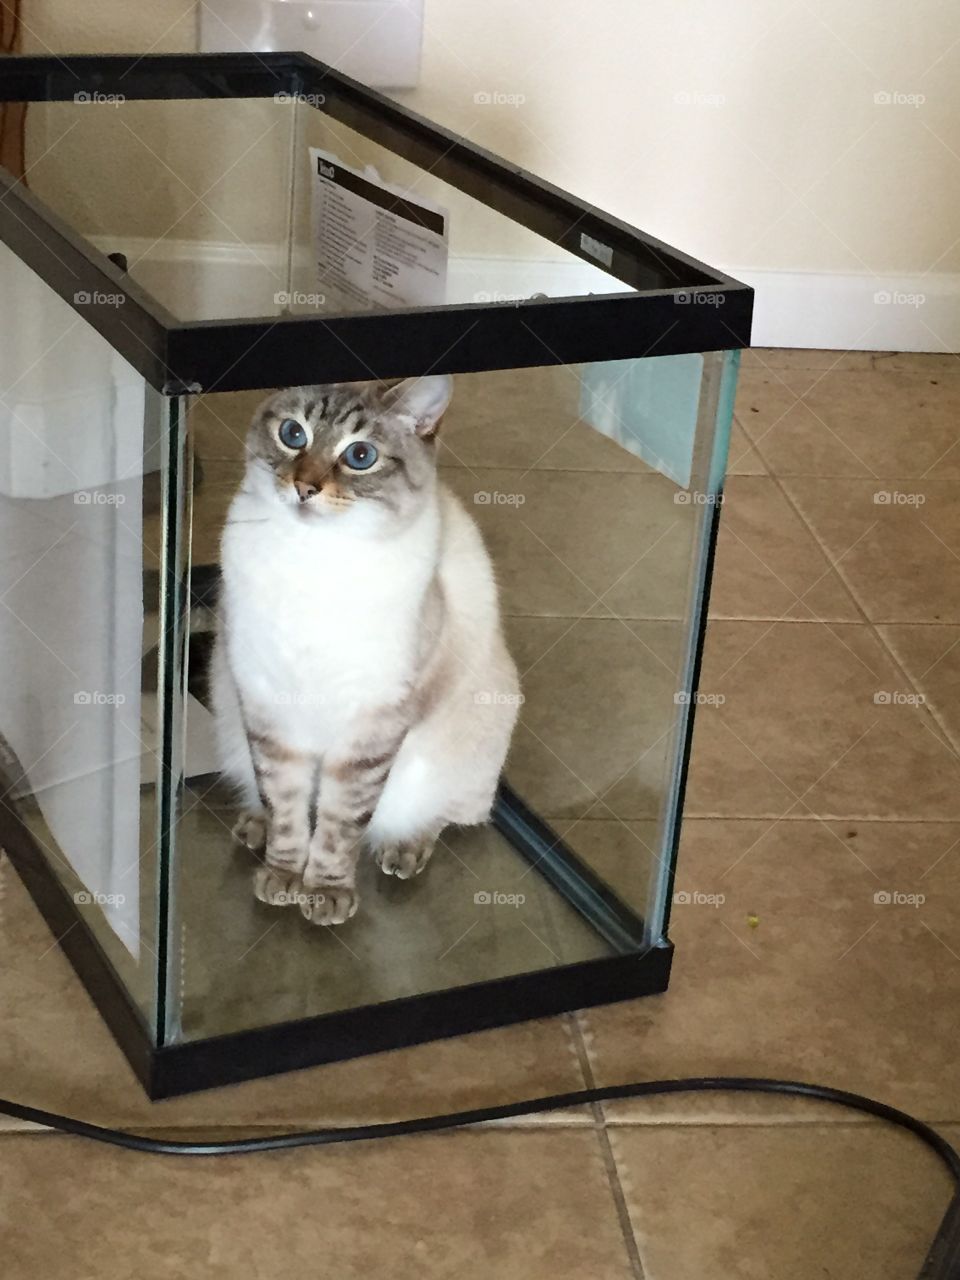 Maven, mavening in a fish tank.